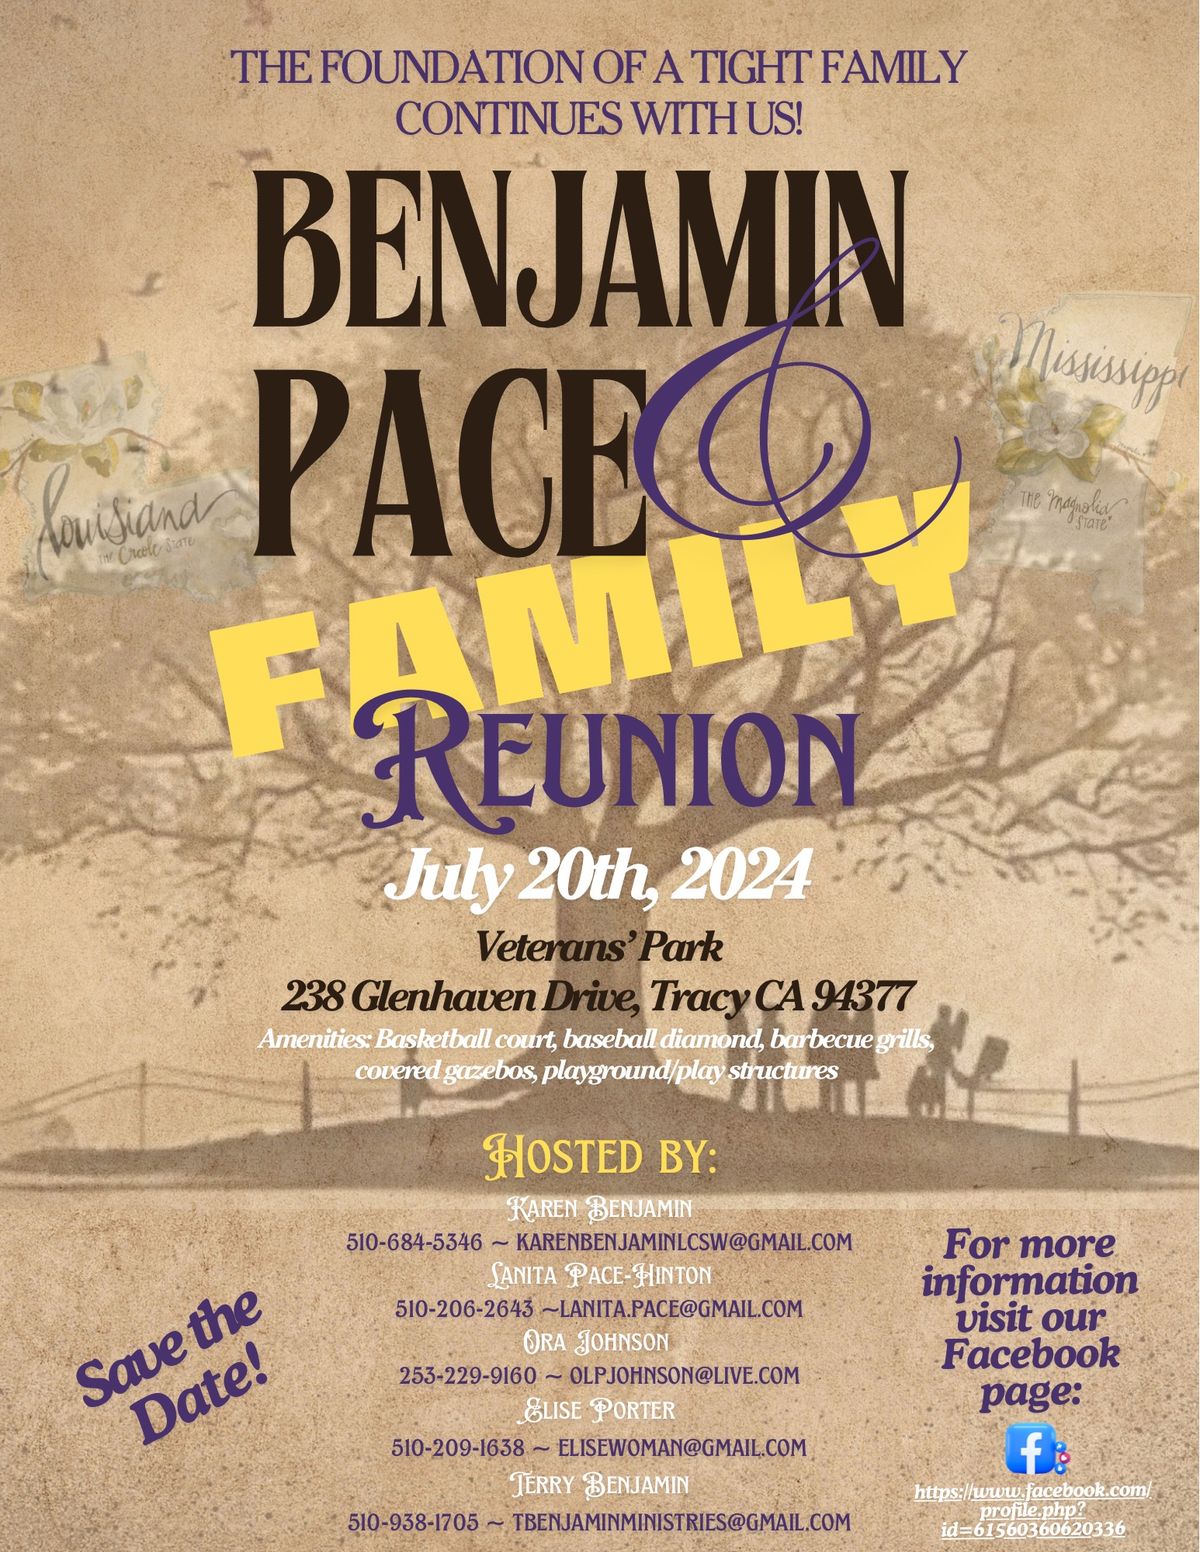 The Benjamin-Pace Family Reunion